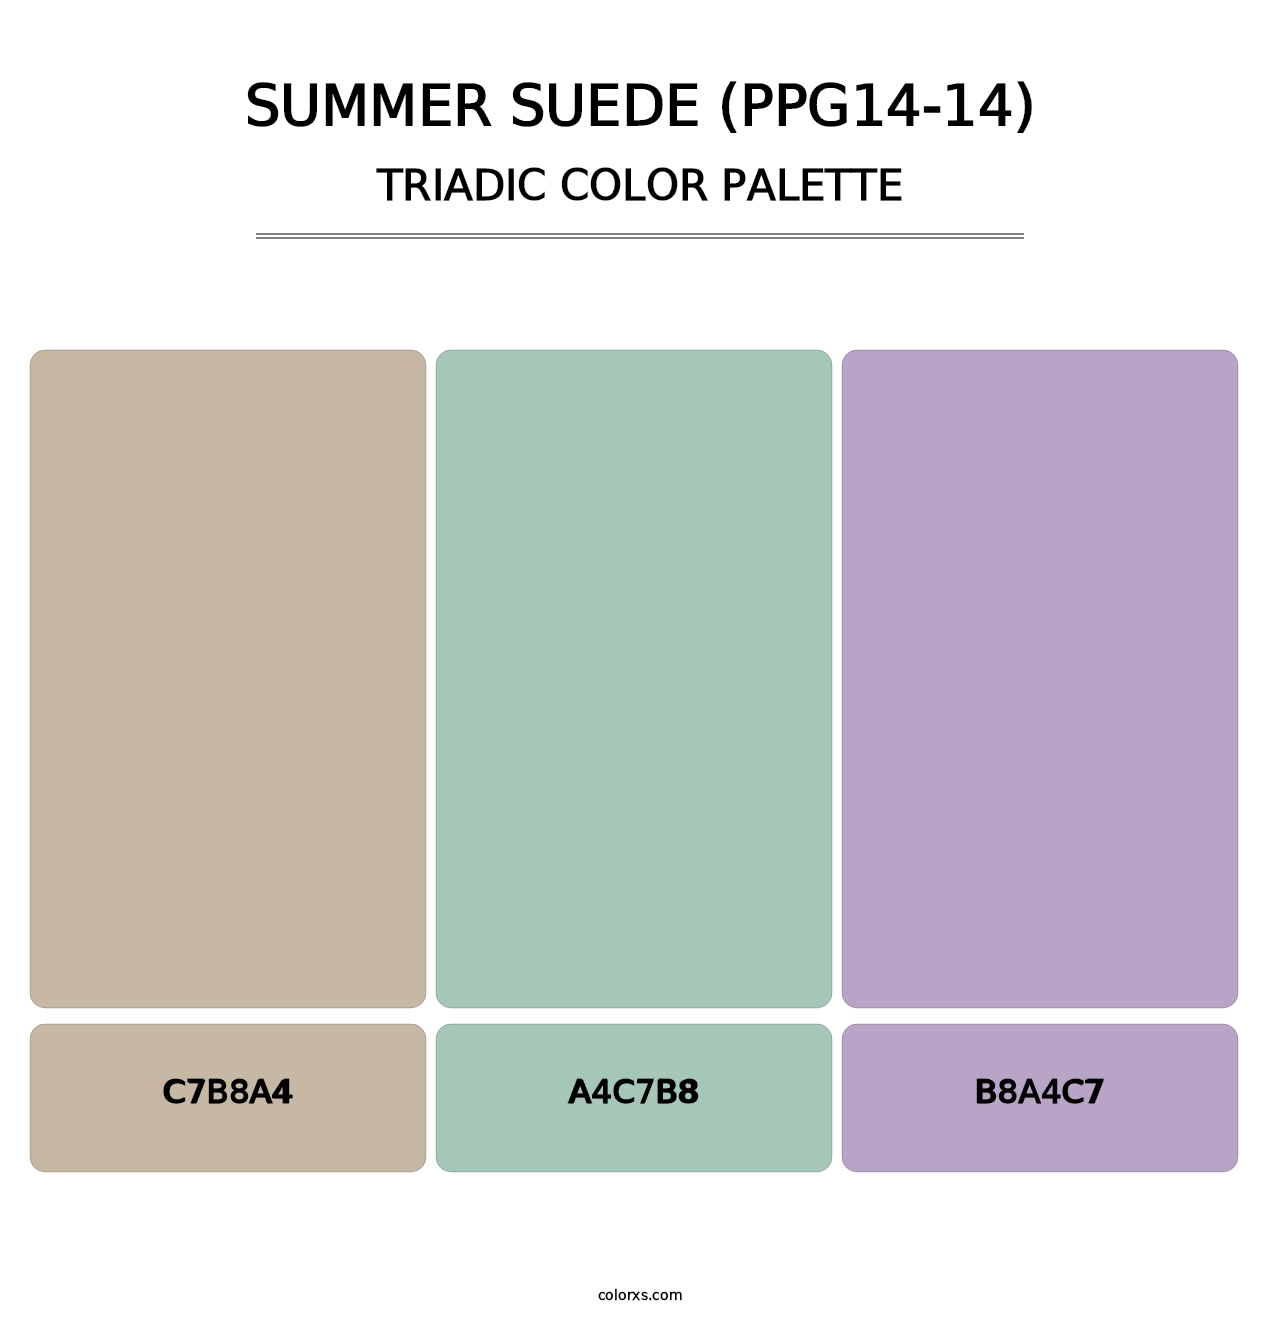 Summer Suede (PPG14-14) - Triadic Color Palette